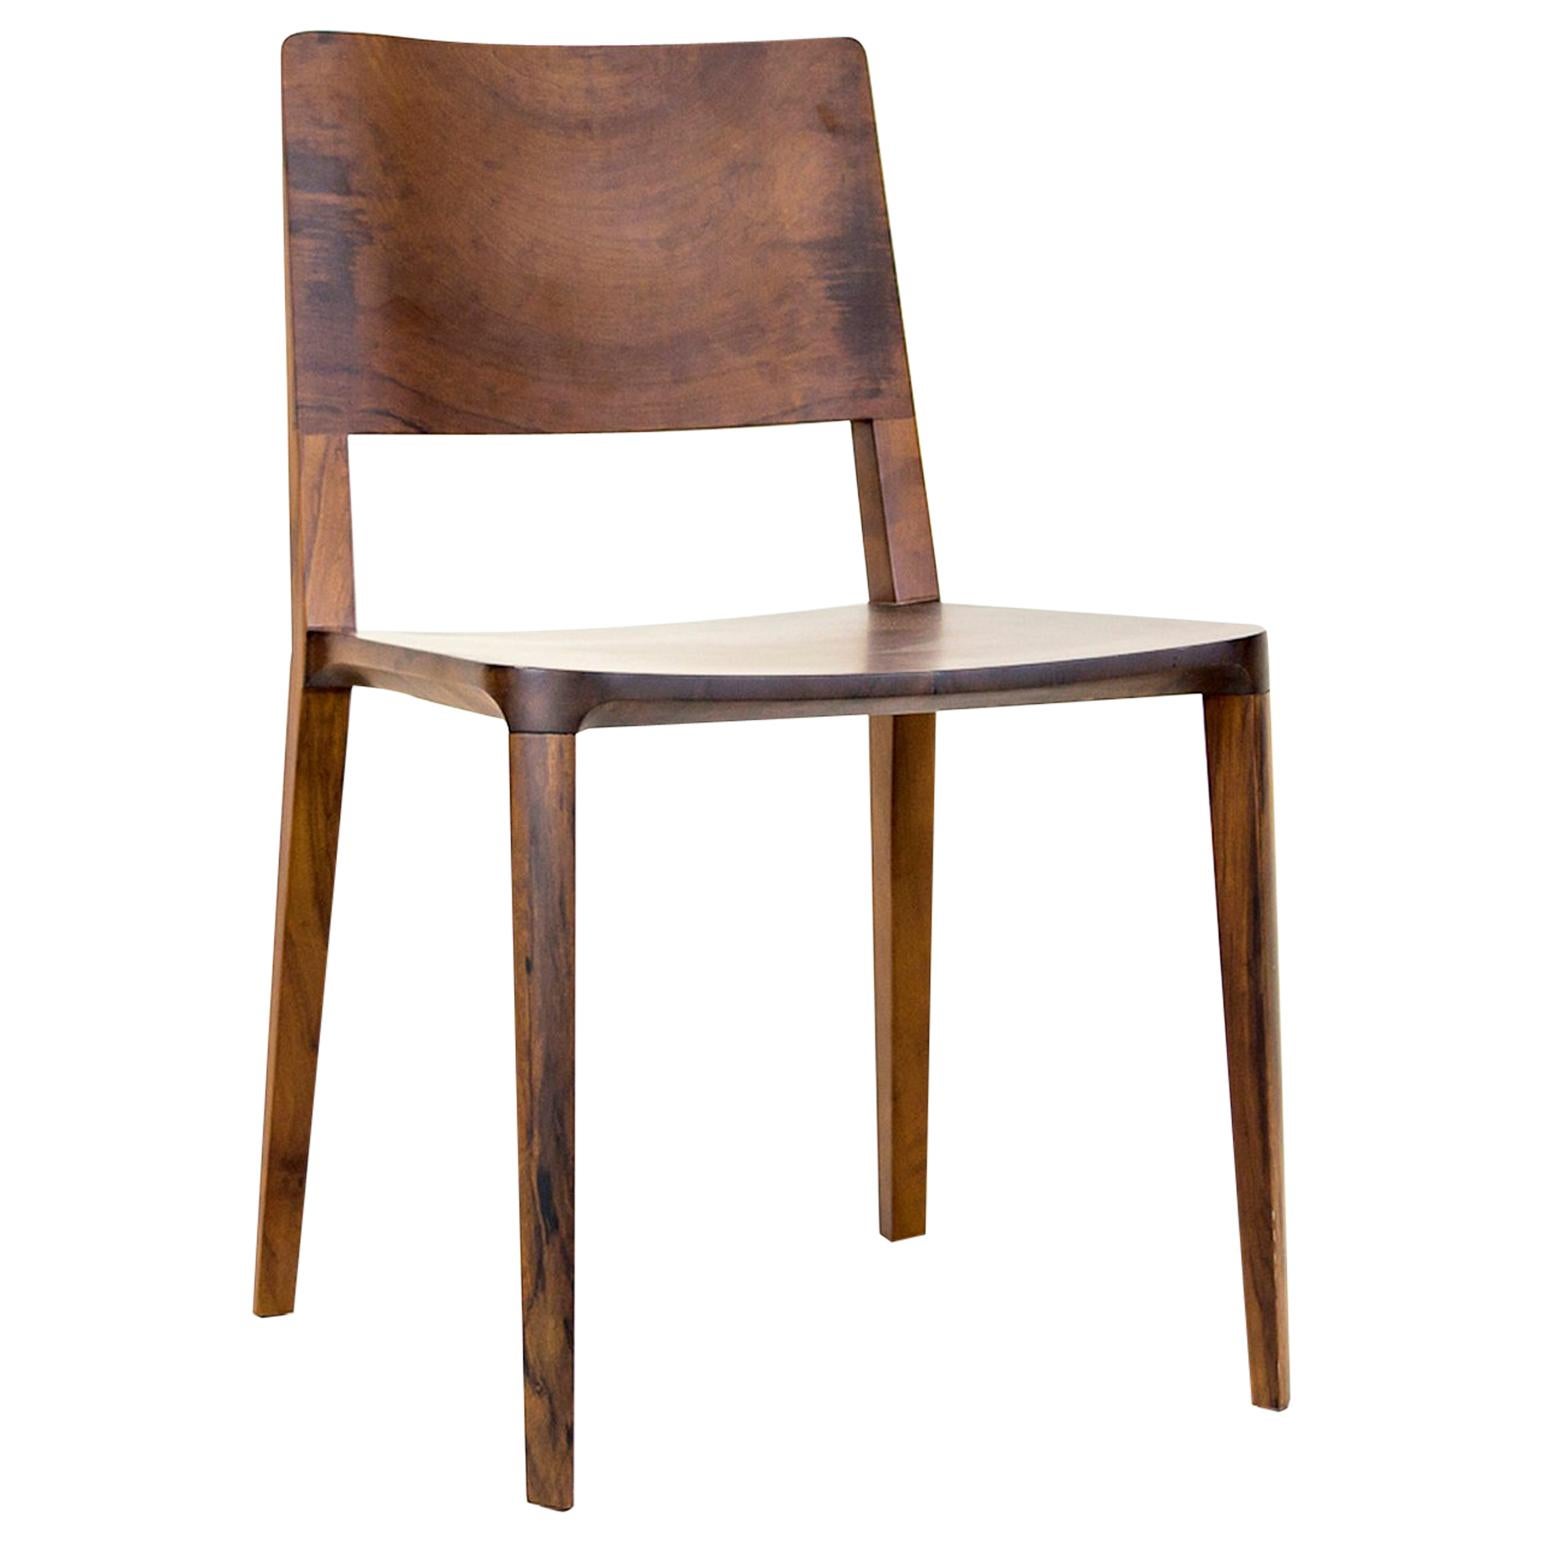 Minimalist Chair in Black Imbuia Hardwood Limited Edition